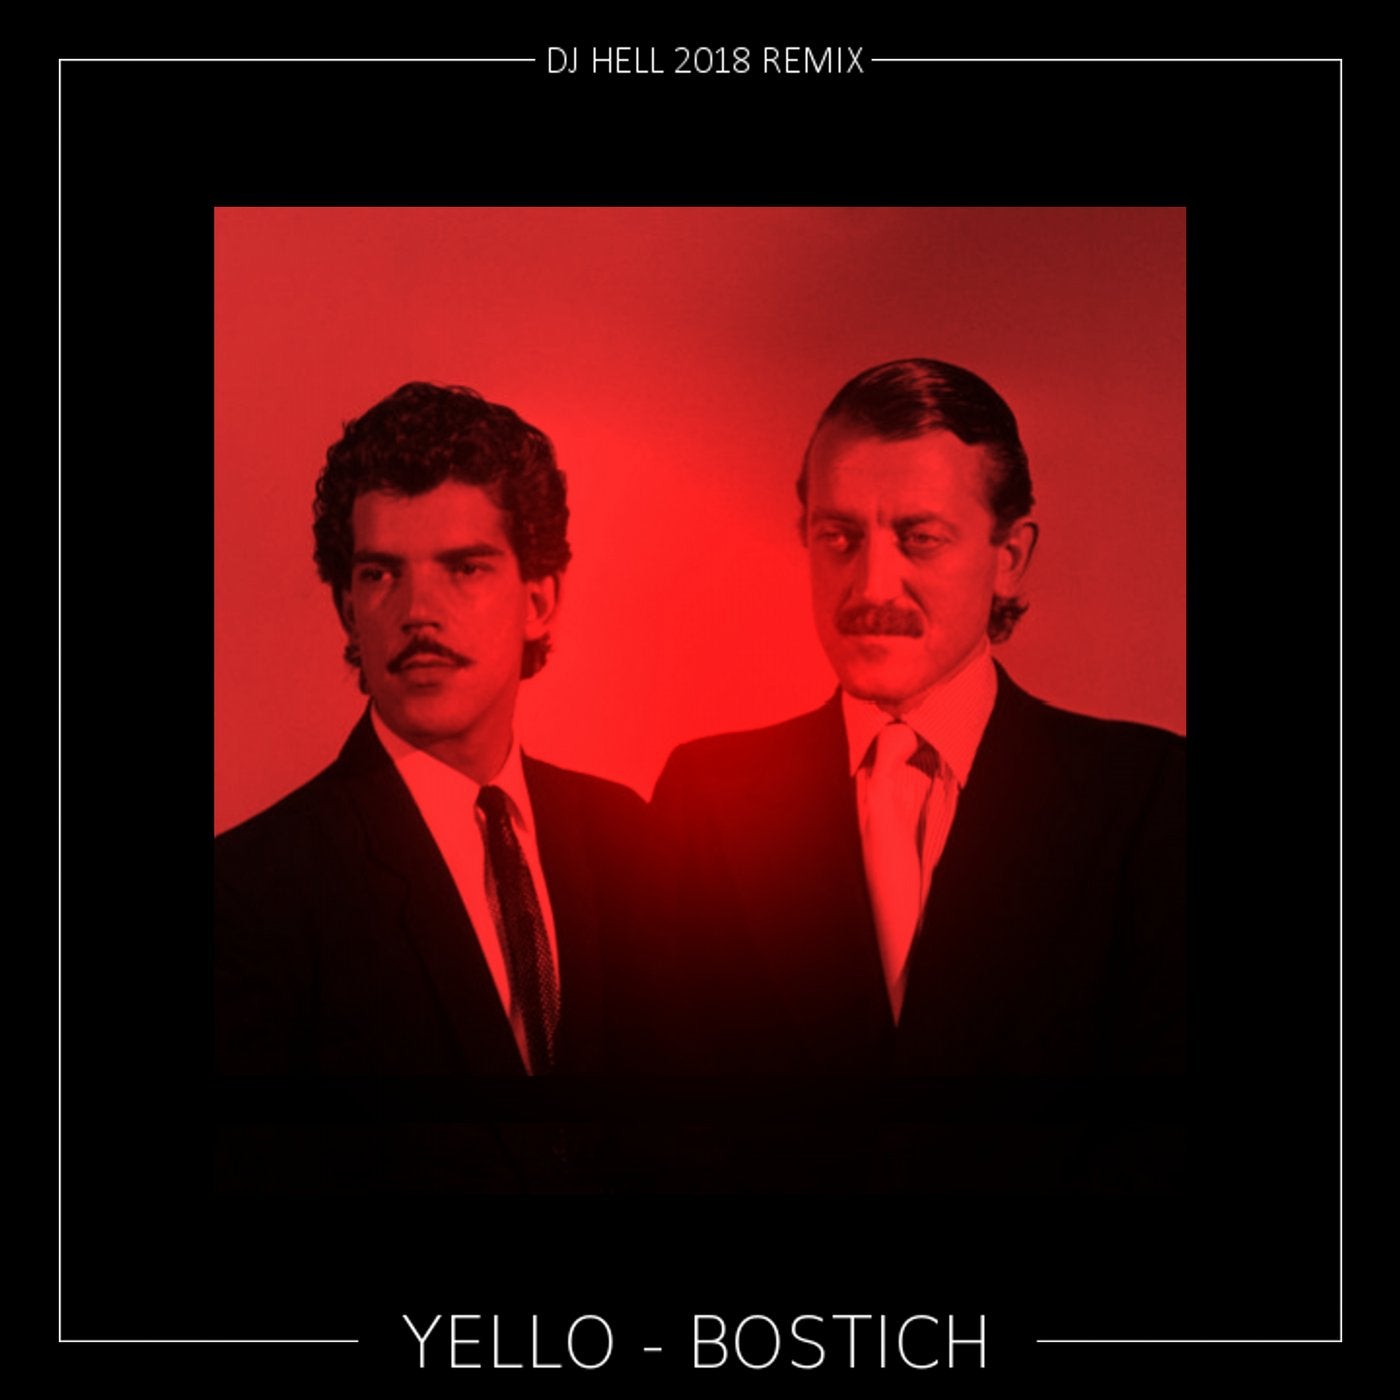 Bostich(DJ Hell 2018 Remix)